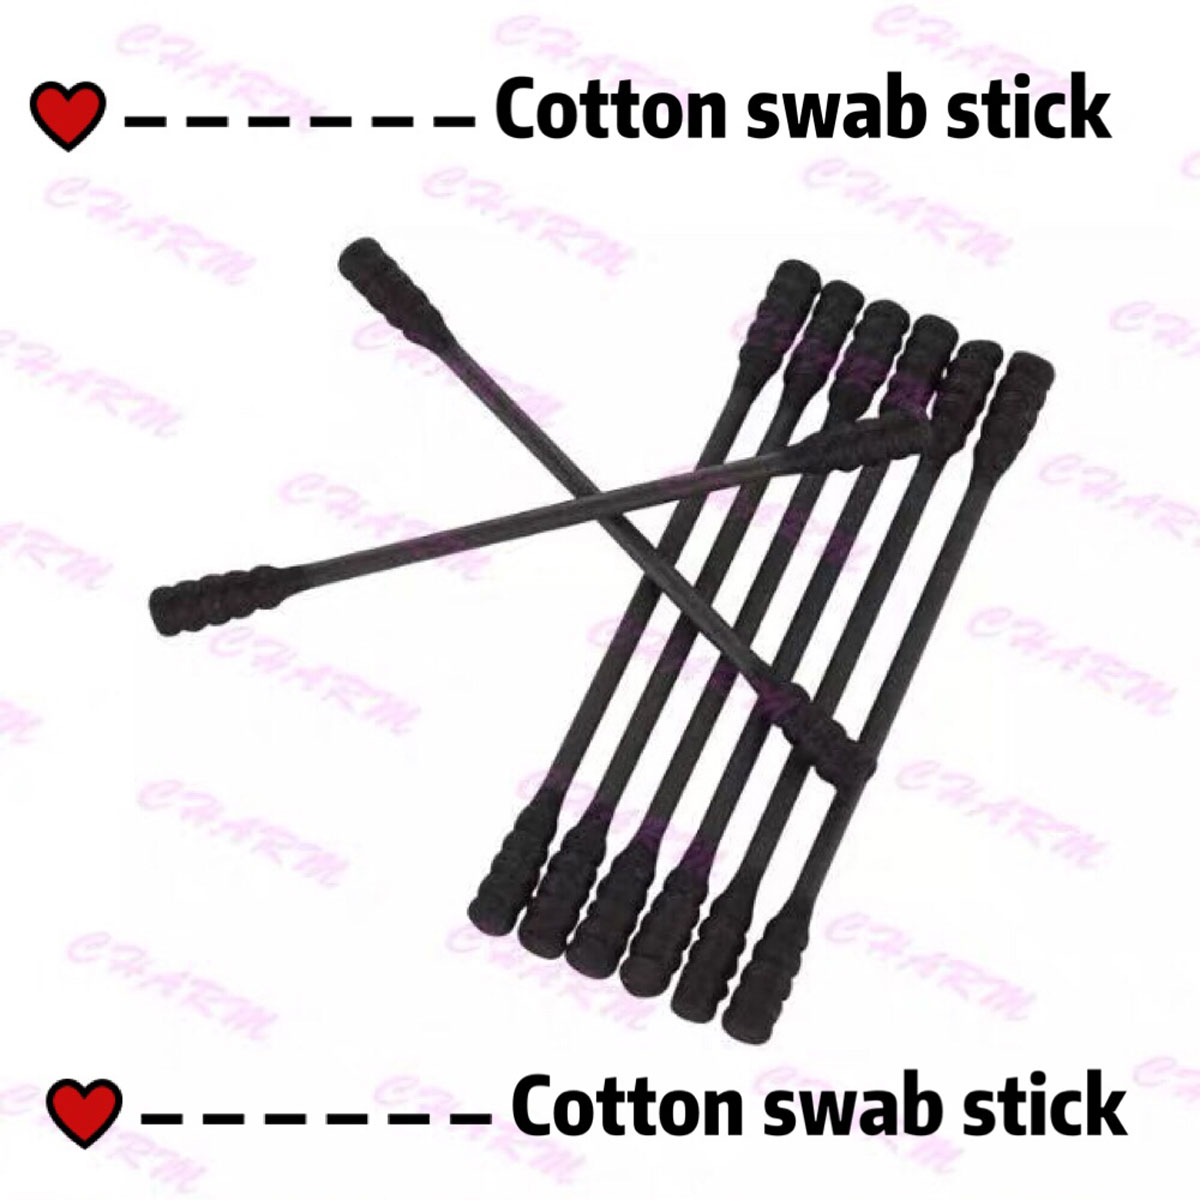 Cotton swab paper stick